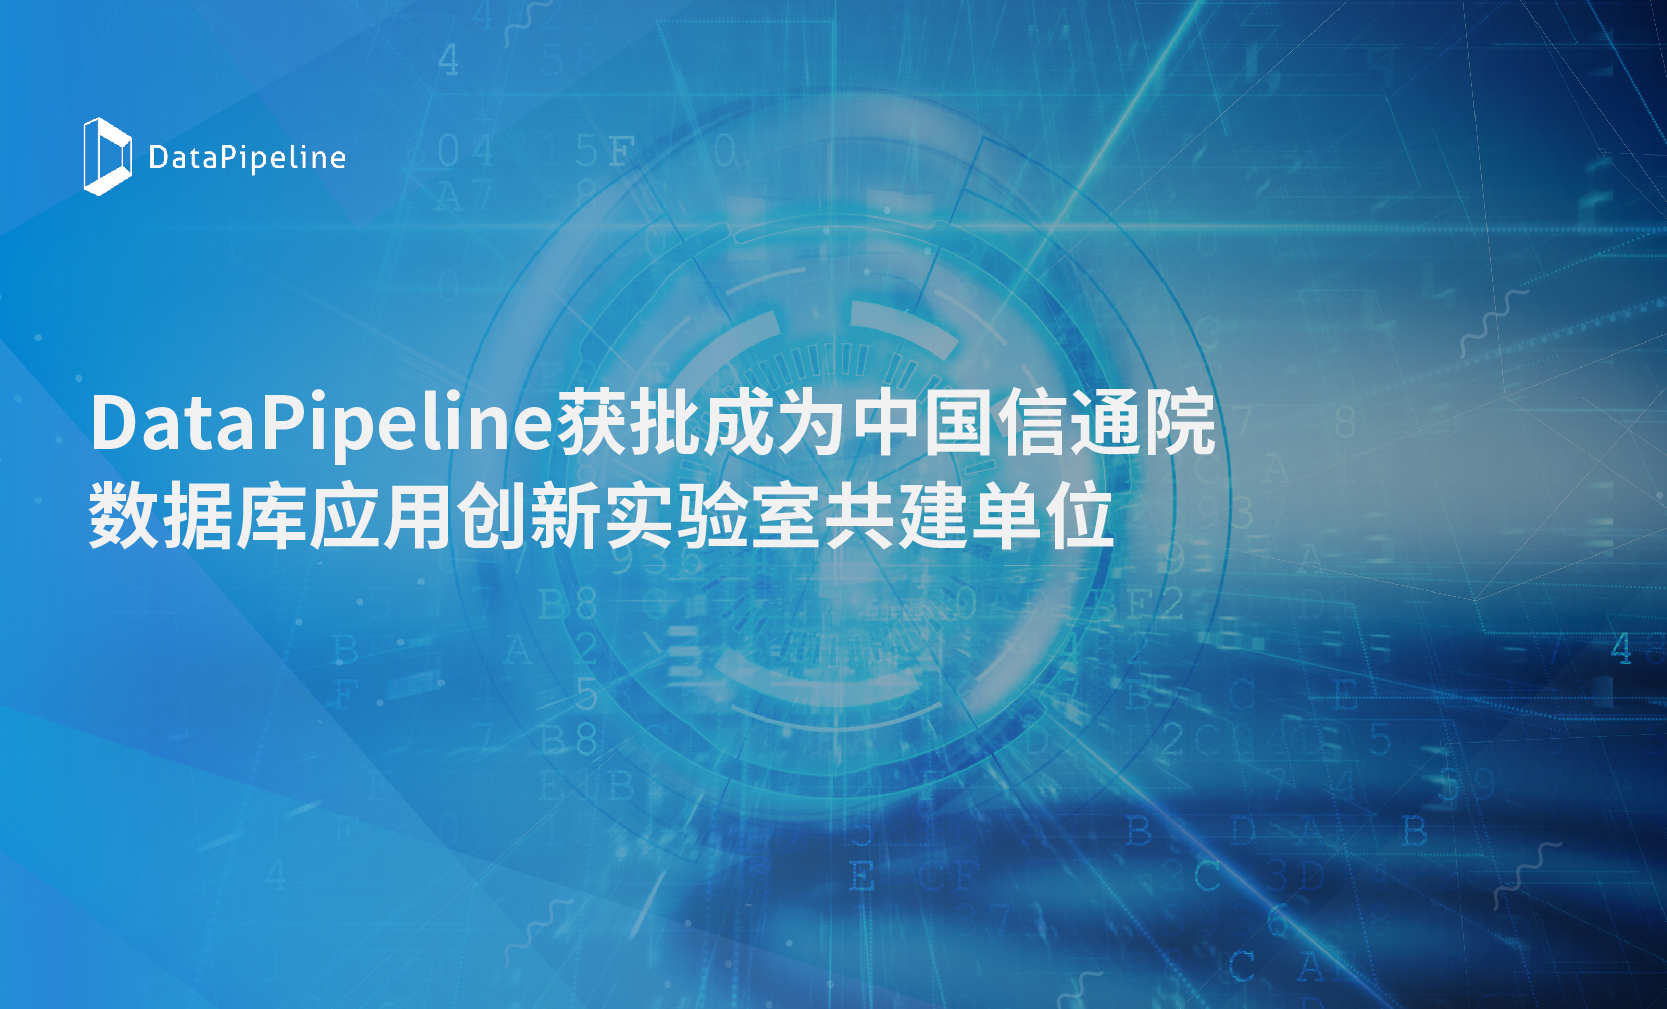 DataPipeline正式加入中国信通院数据库应用创新实验室！